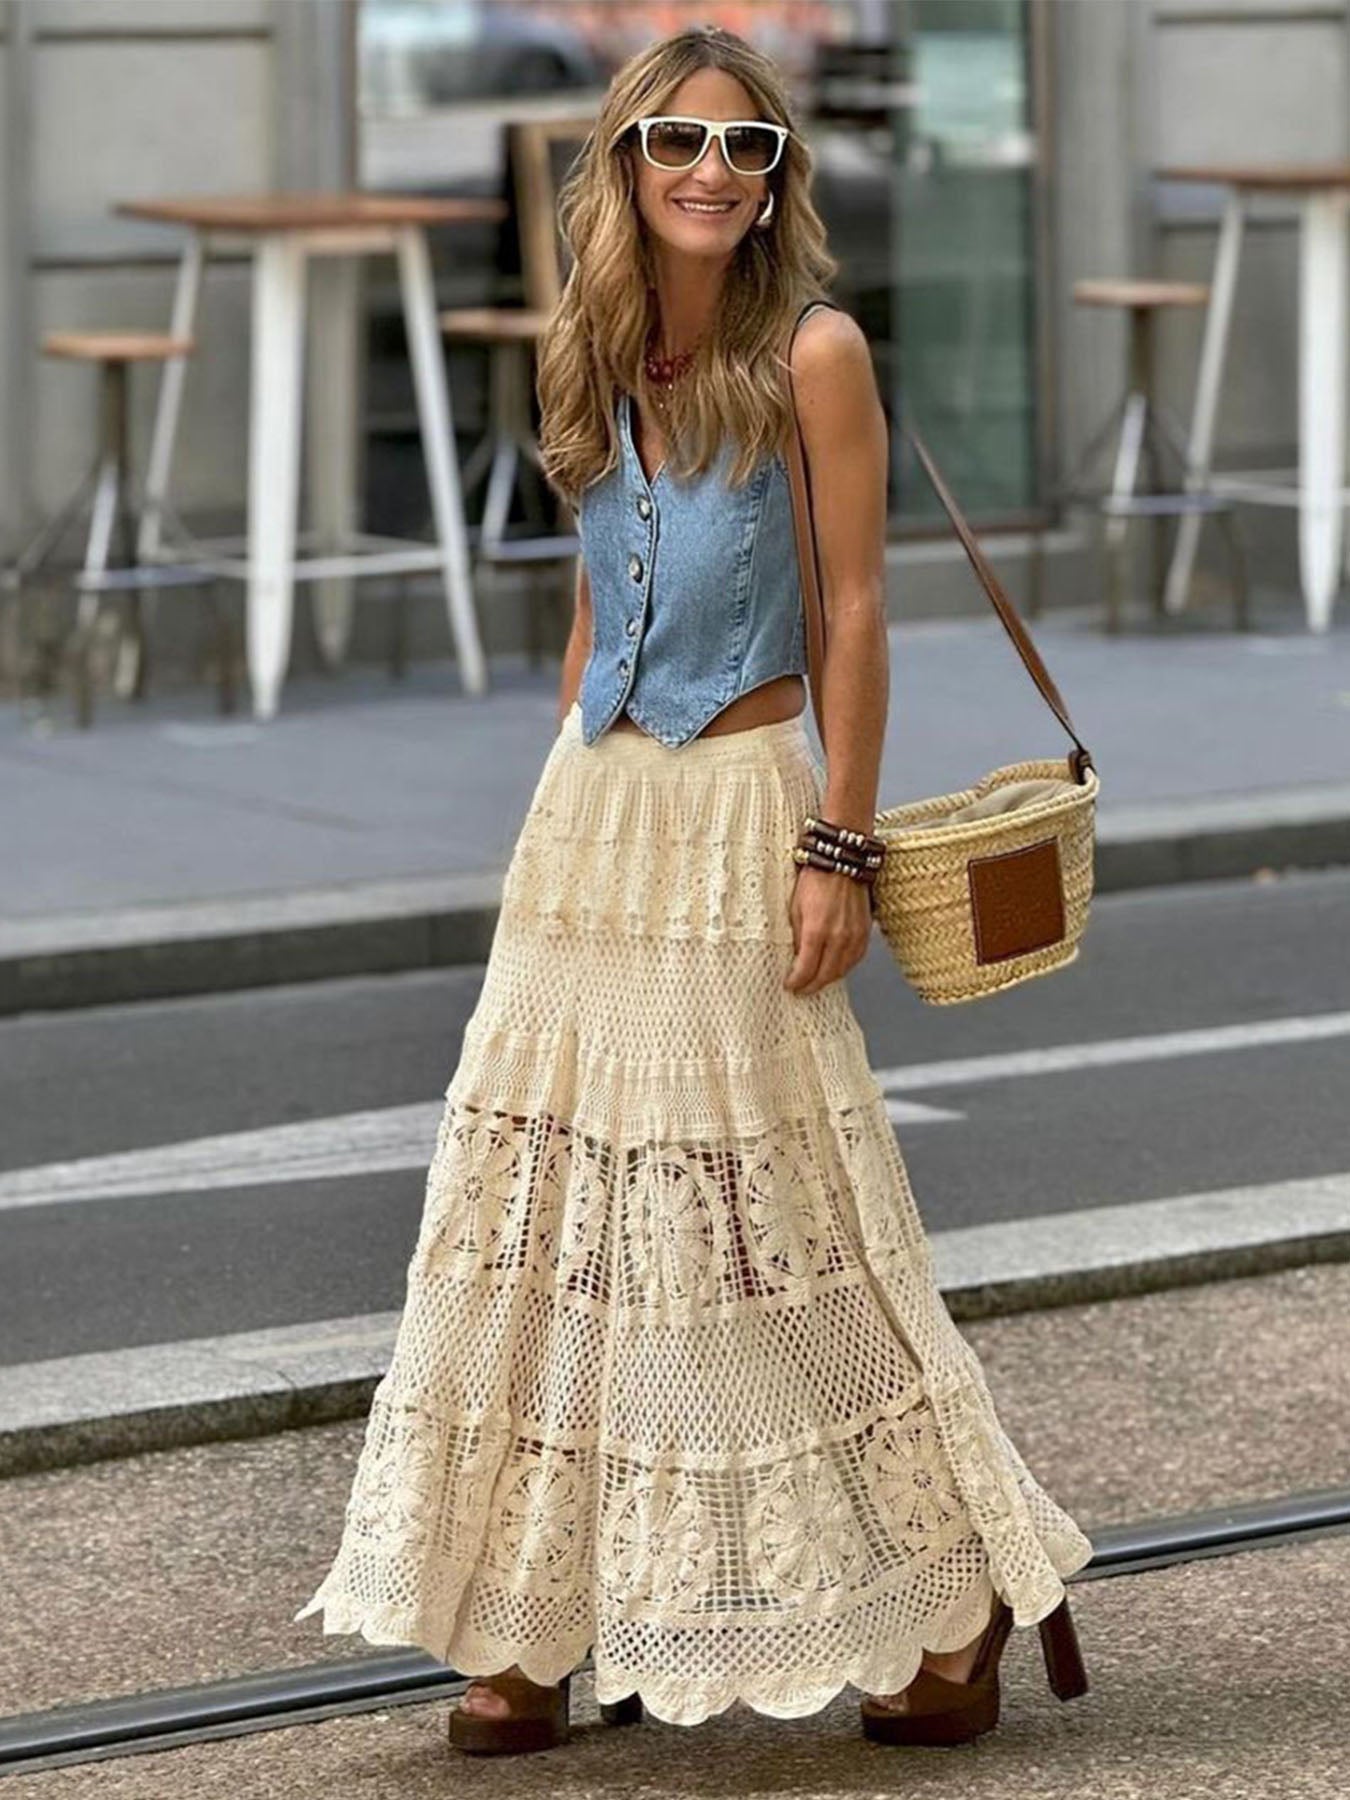 Vorioal Lace Half Skirt